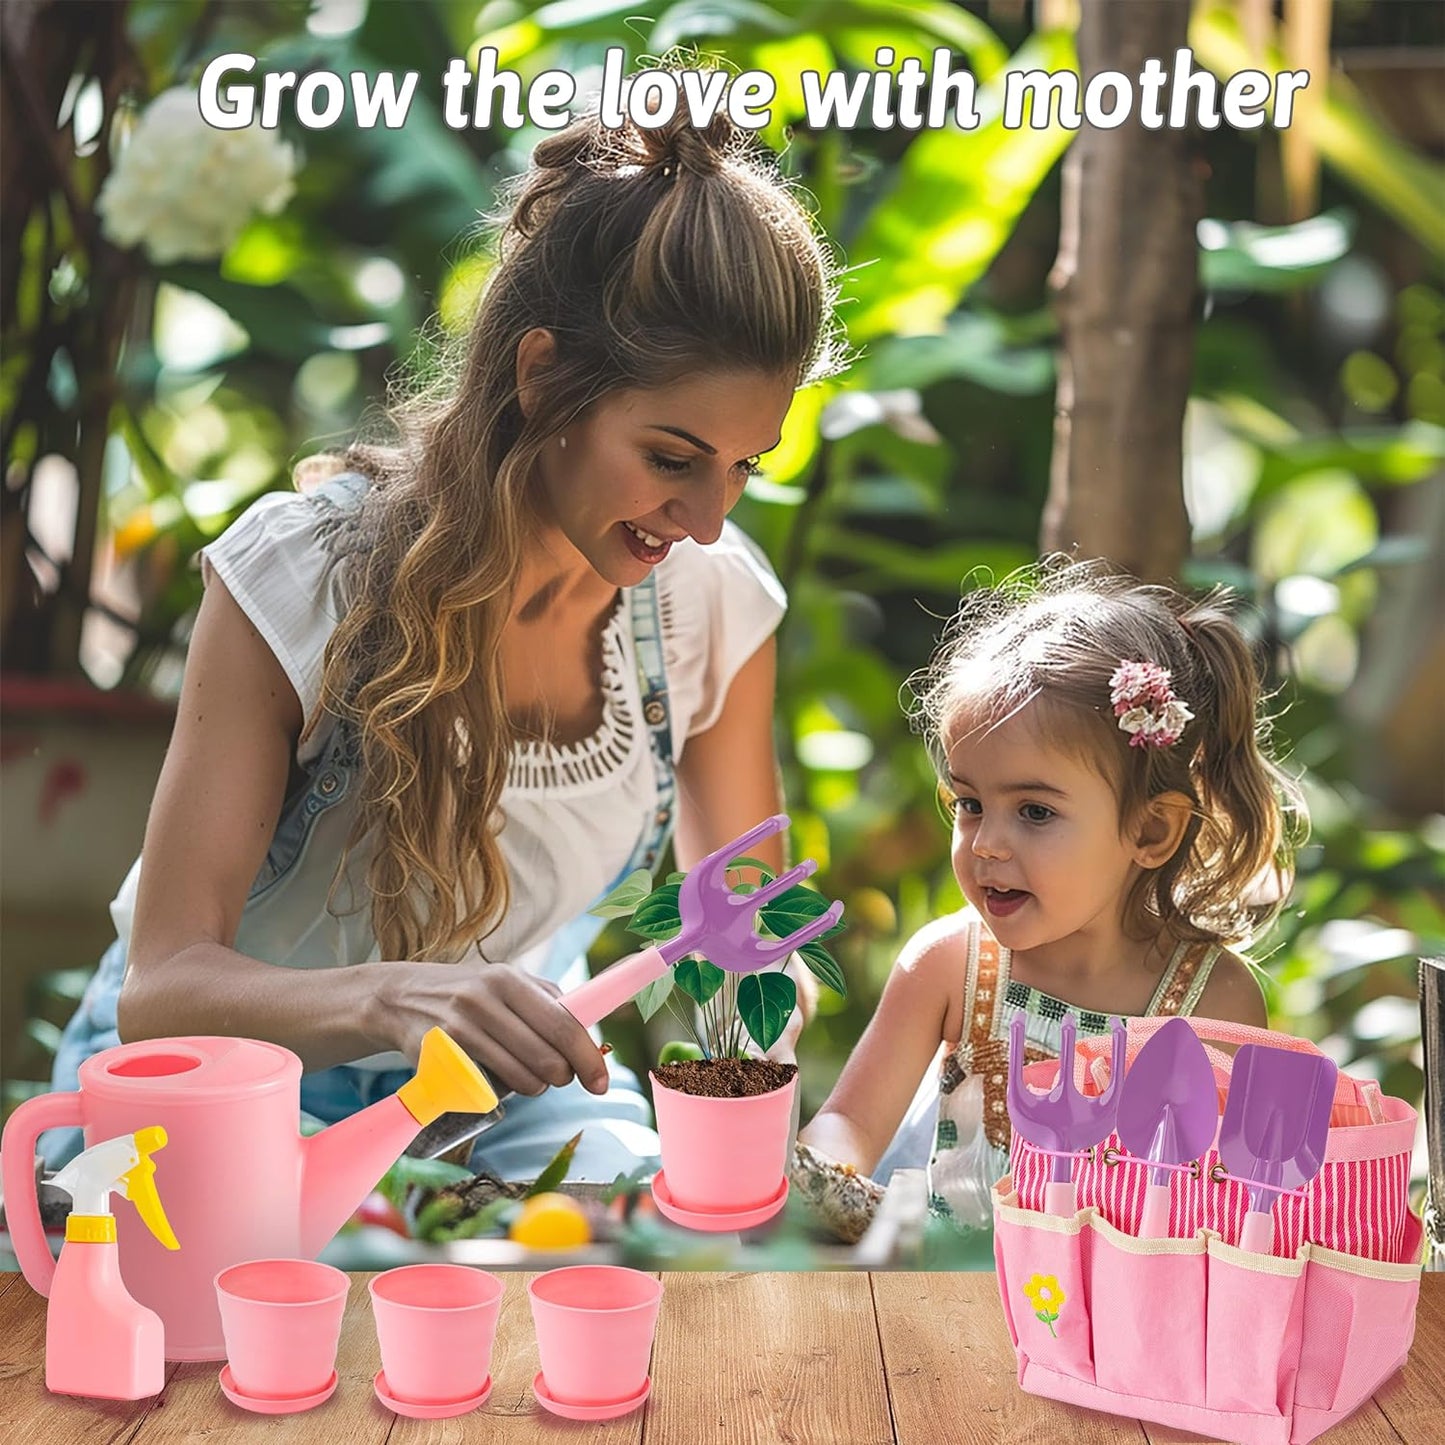 Kids Pink Gardening Tools Set, Garden Toys W/Metal Rake, Shovel, Trowel, Watering Can, Gloves, Tote Bag, Plant Pots, DIY Bookmark Kits, Spring Summer Toy Outdoor Gift for Toddler Boy Girl